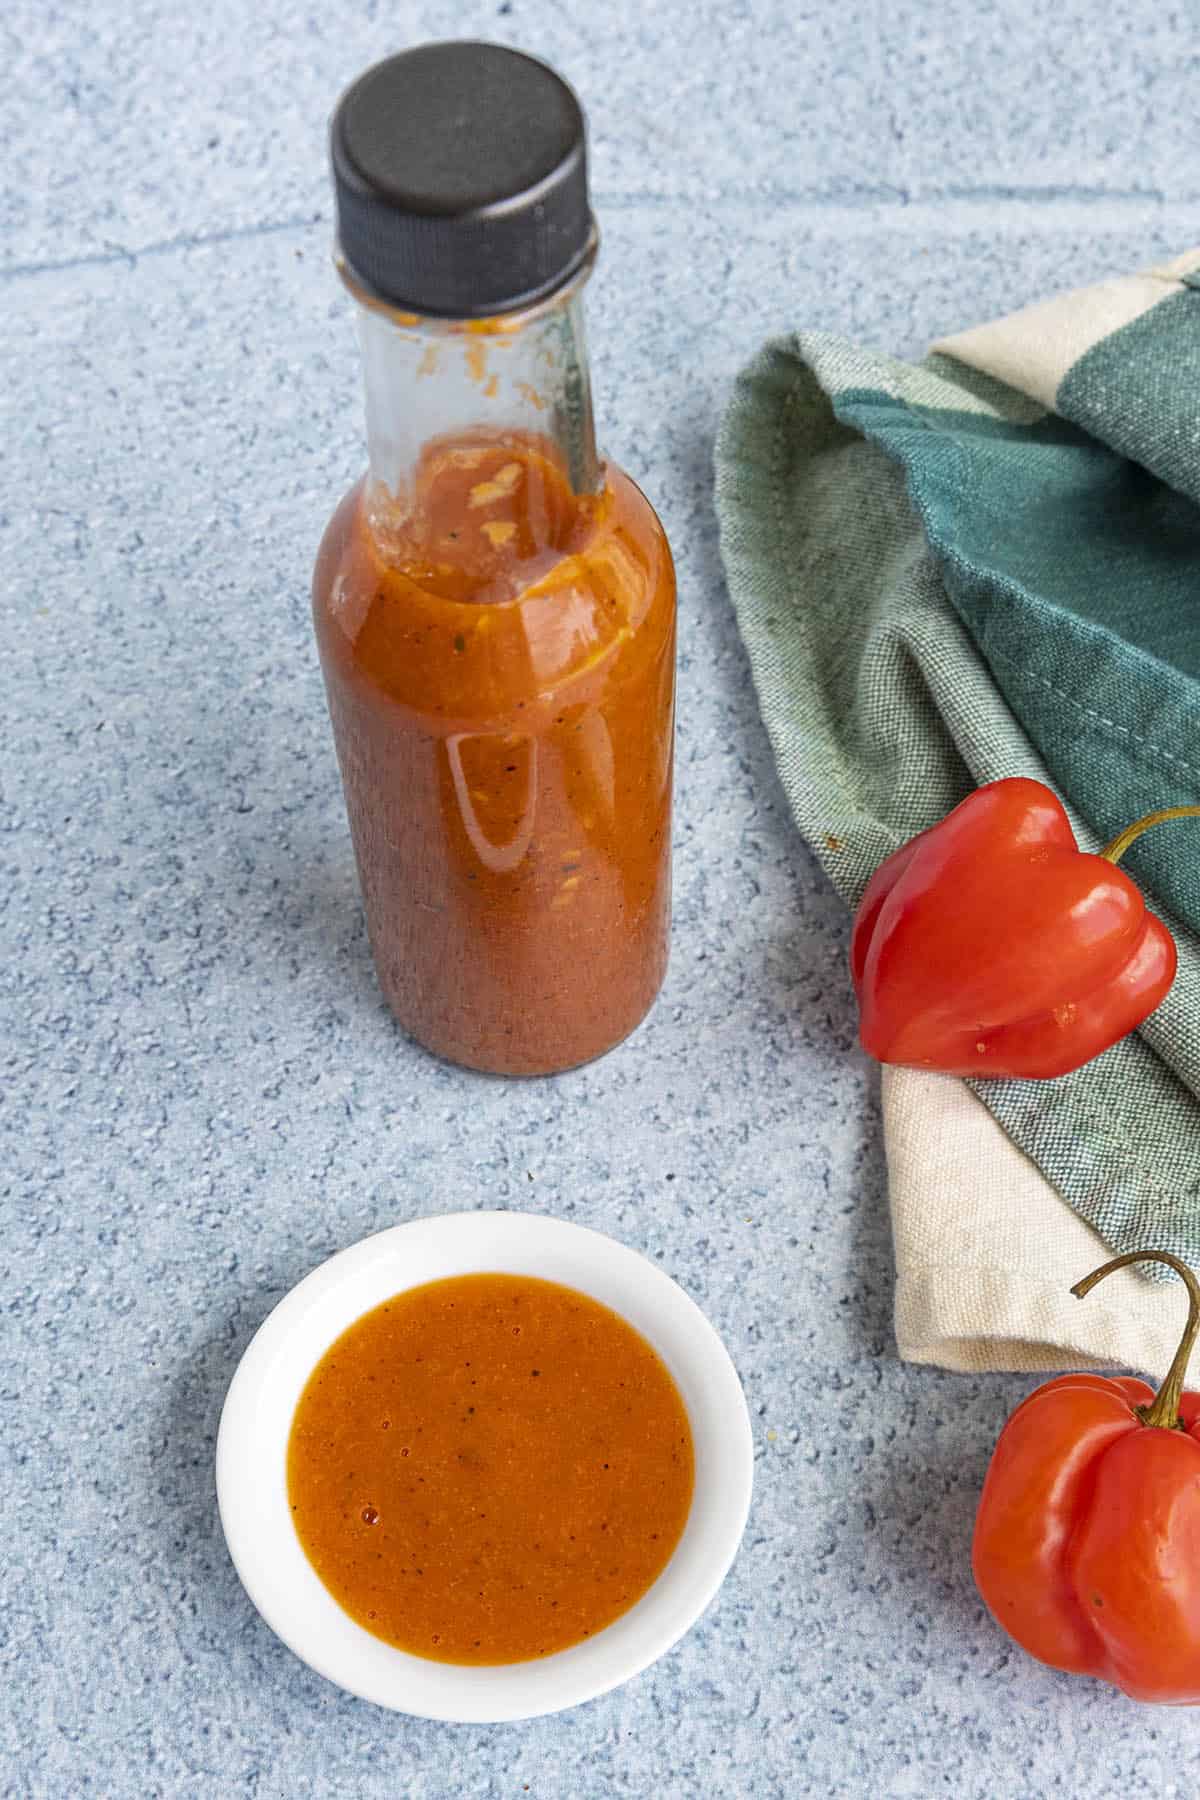 Habanero Hot Sauce, ready to serve